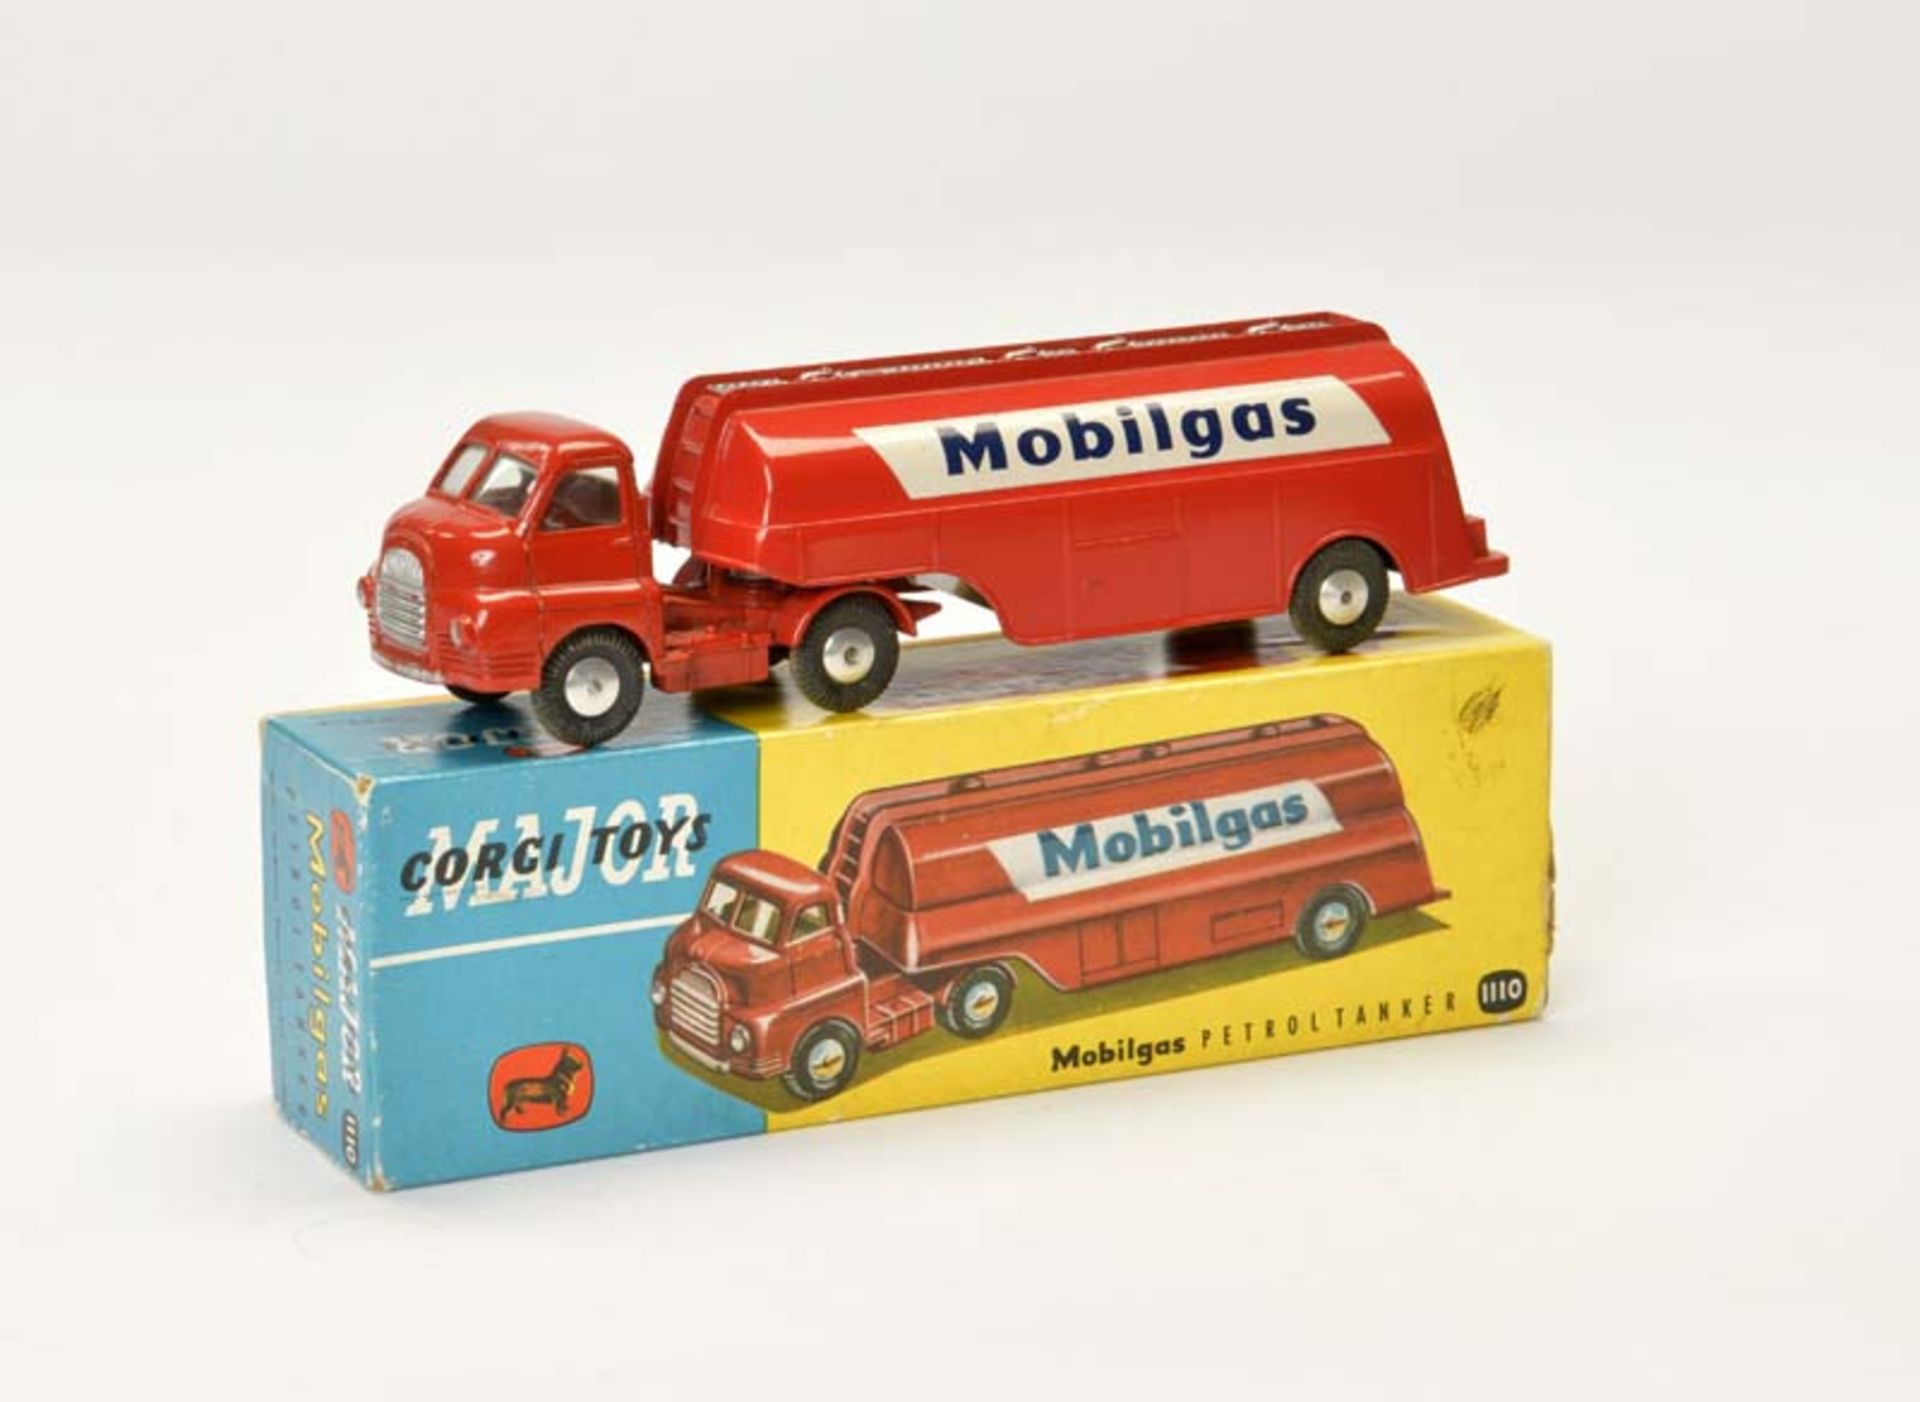 Corgi Toys, Mobilgas Petrol Tank Truck 1110, Great Britain, 1:43, diecast, box C 1-2, C 1-